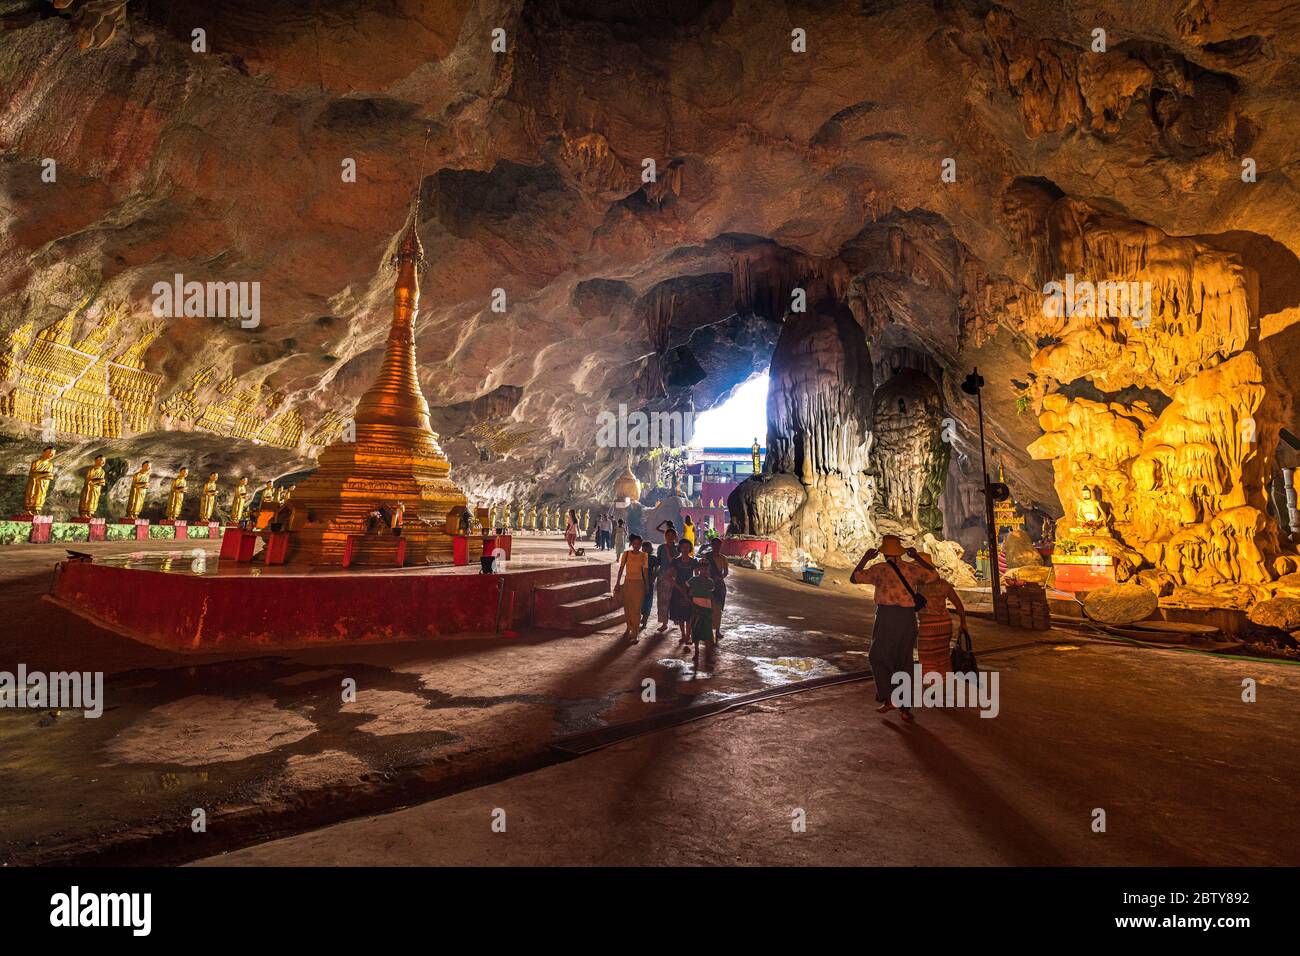 Höhle gefüllt mit buddhas, Saddan Höhle, hPa-an, Kayin Staat, Myanmar (Burma), Asien Stockfoto